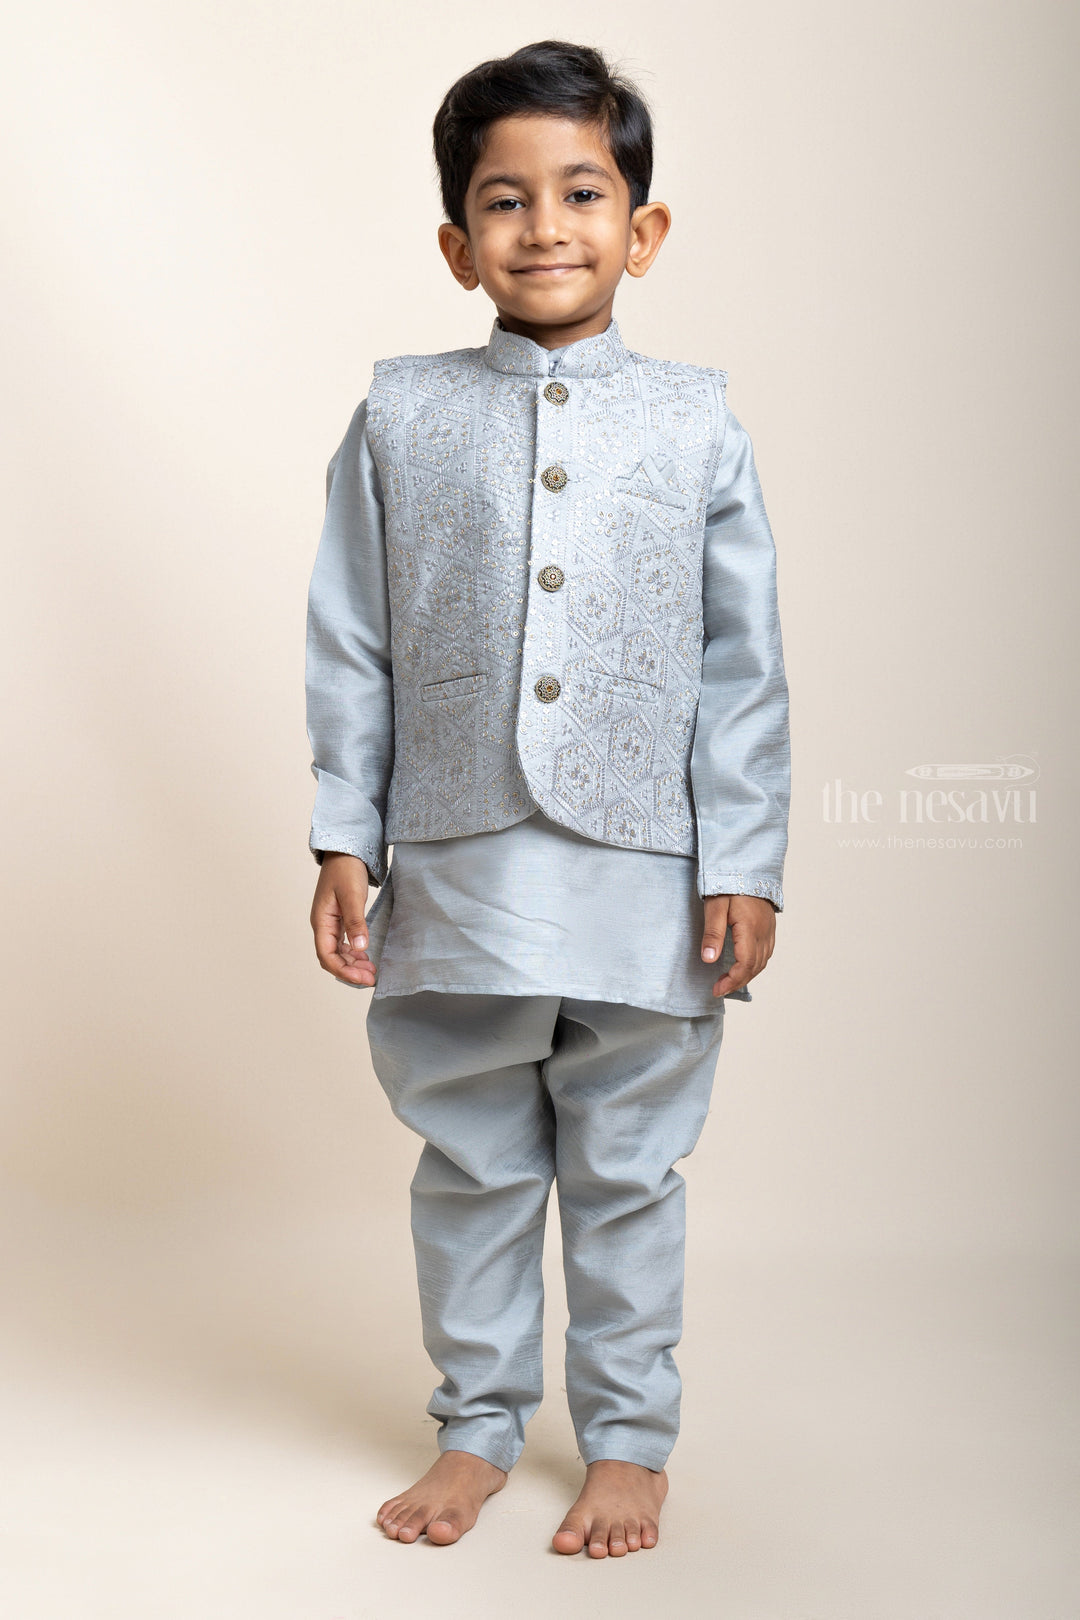 The Nesavu Boys Jacket Sets Attractive Grey Kurta Set With Embellished Overcoat For Baby Boys psr silks Nesavu 16 (1Y) / Gray / Silk Blend BES264A